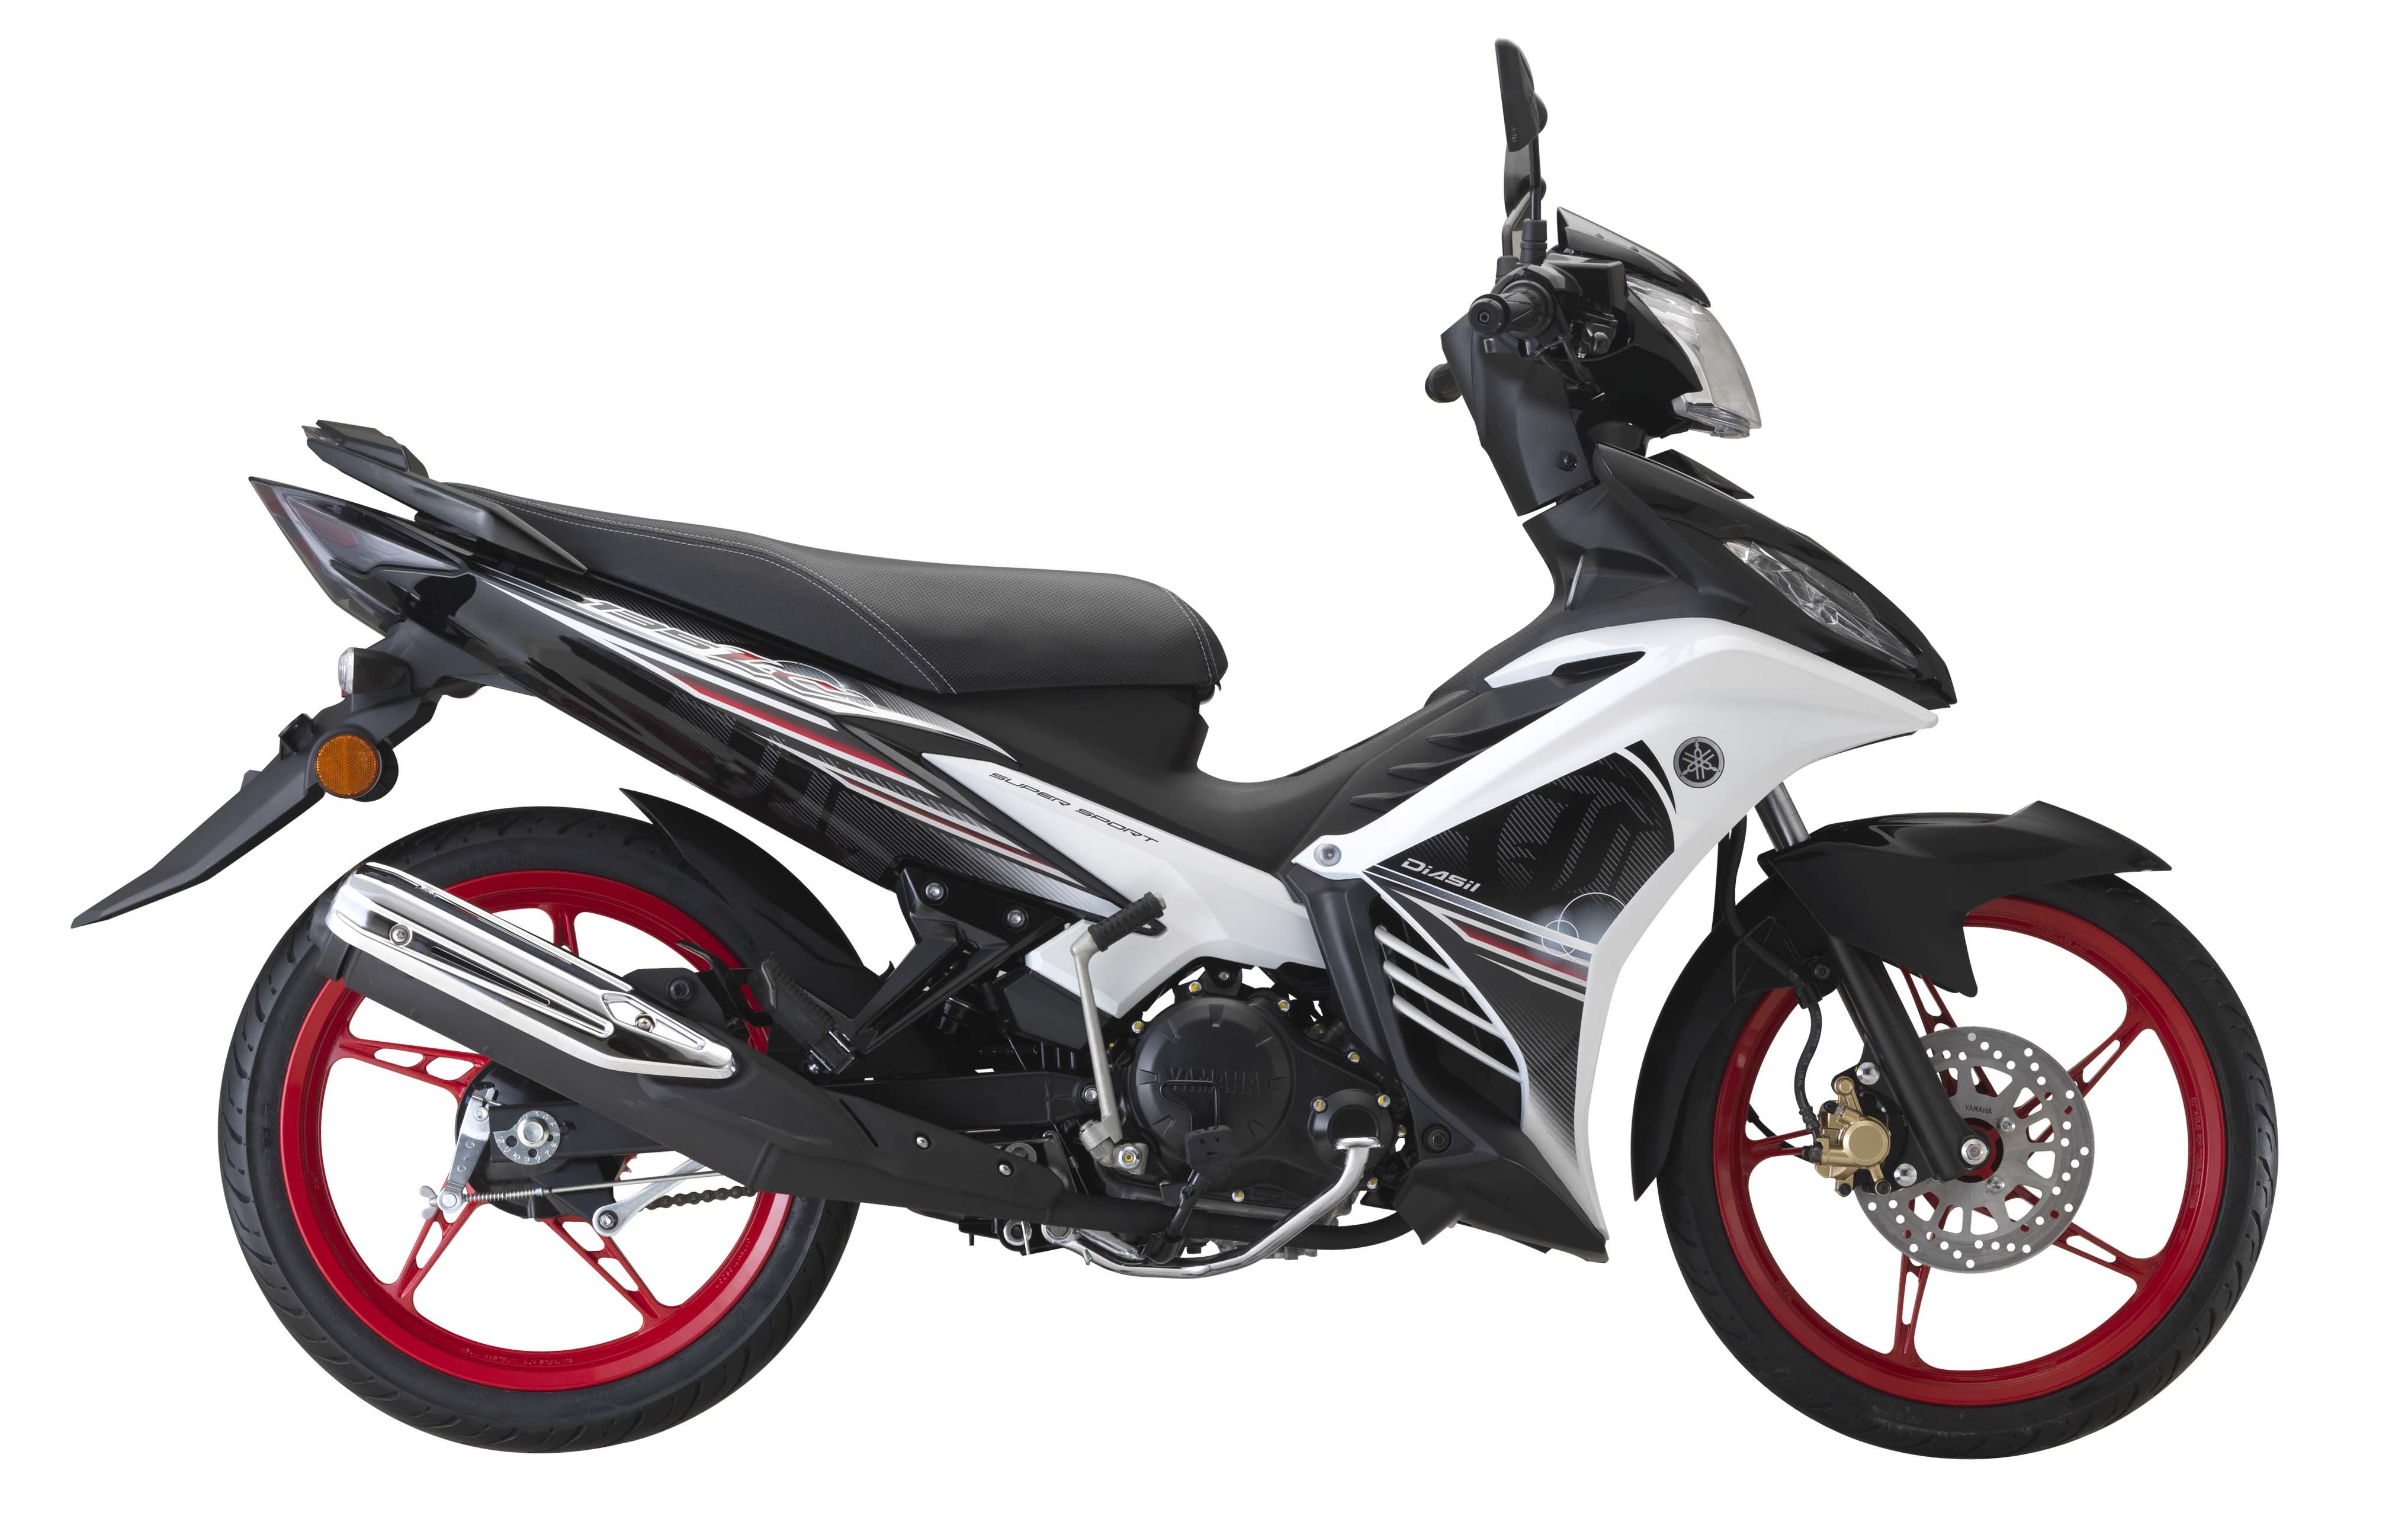 2016 Yamaha 135LC price confirmed, up to RM7,068 2016 Yamaha LC135